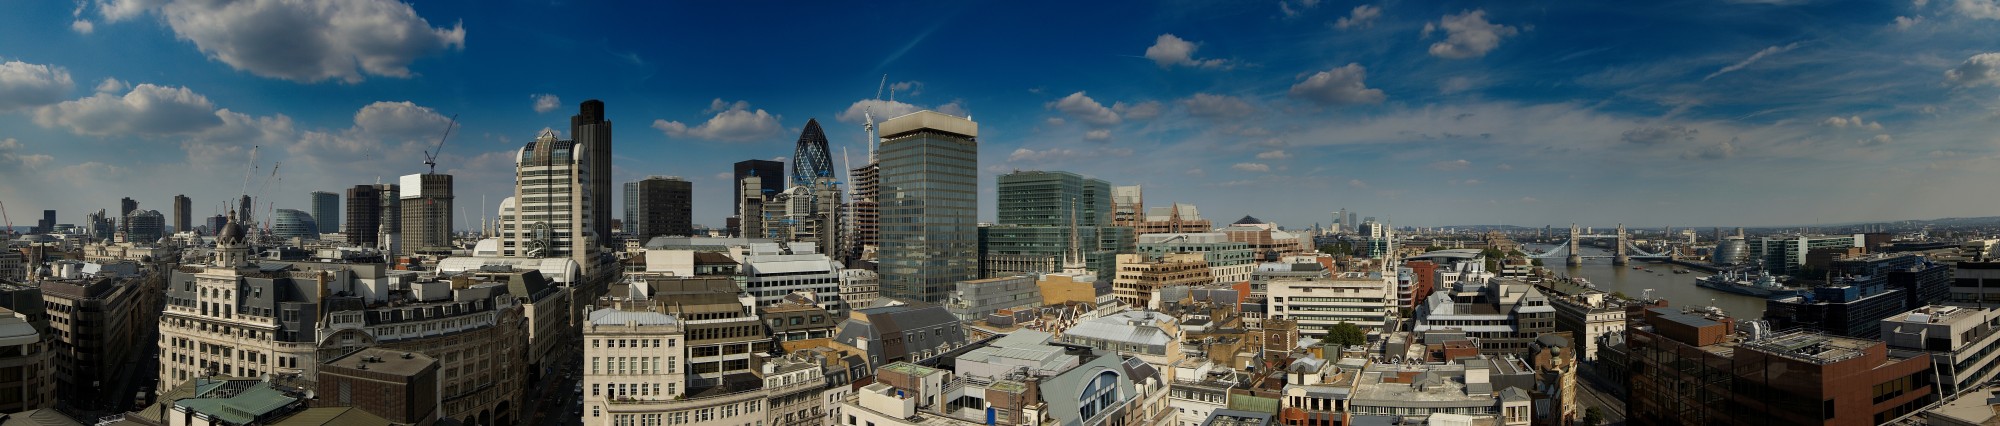 London panorama top monument